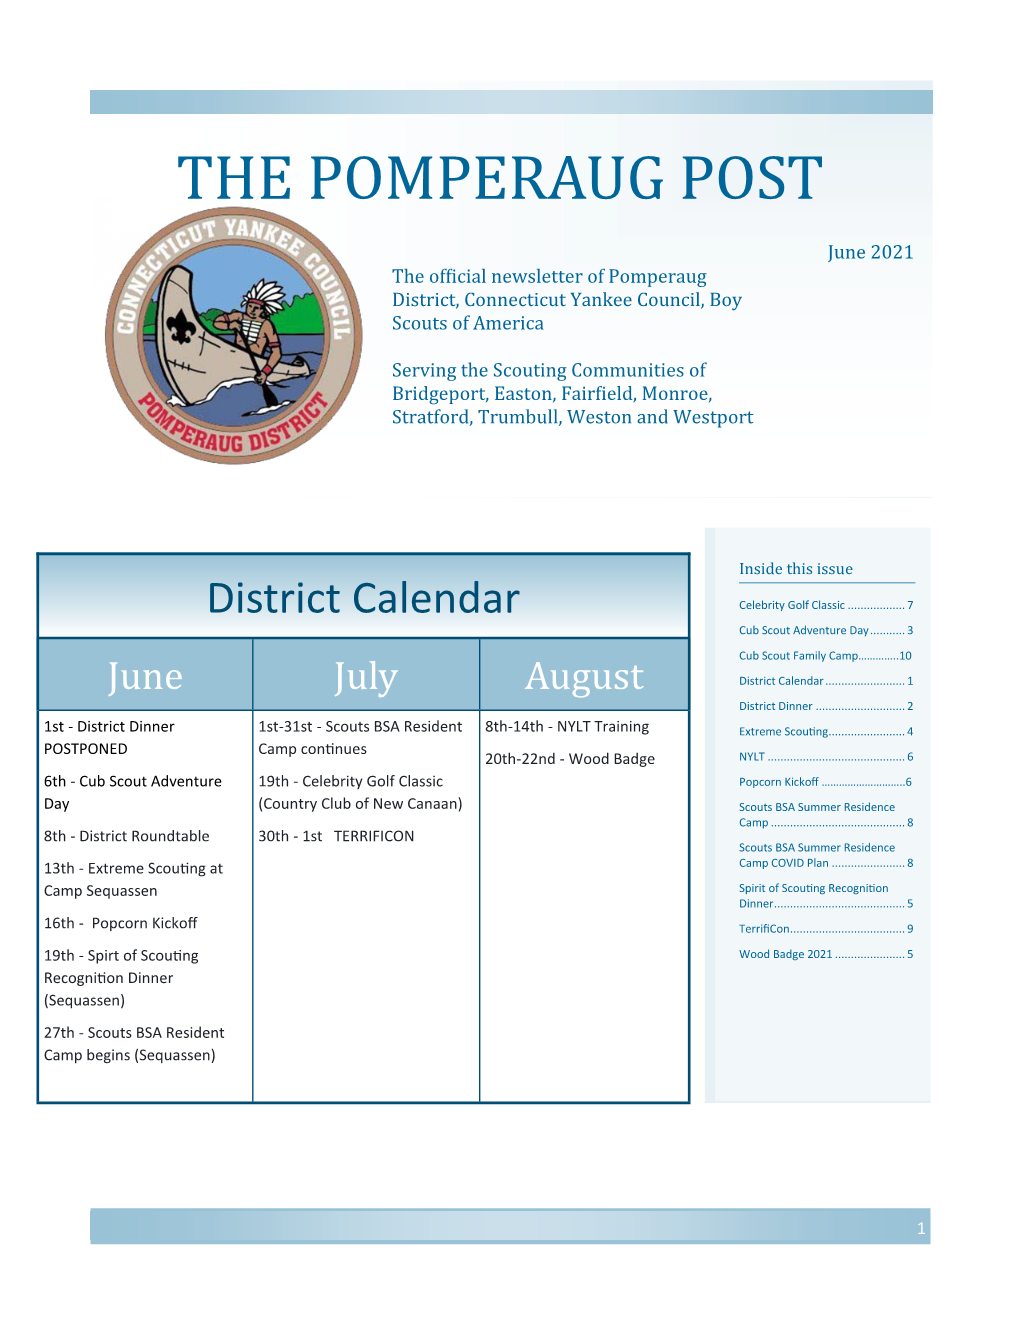 The Pomperaug Post